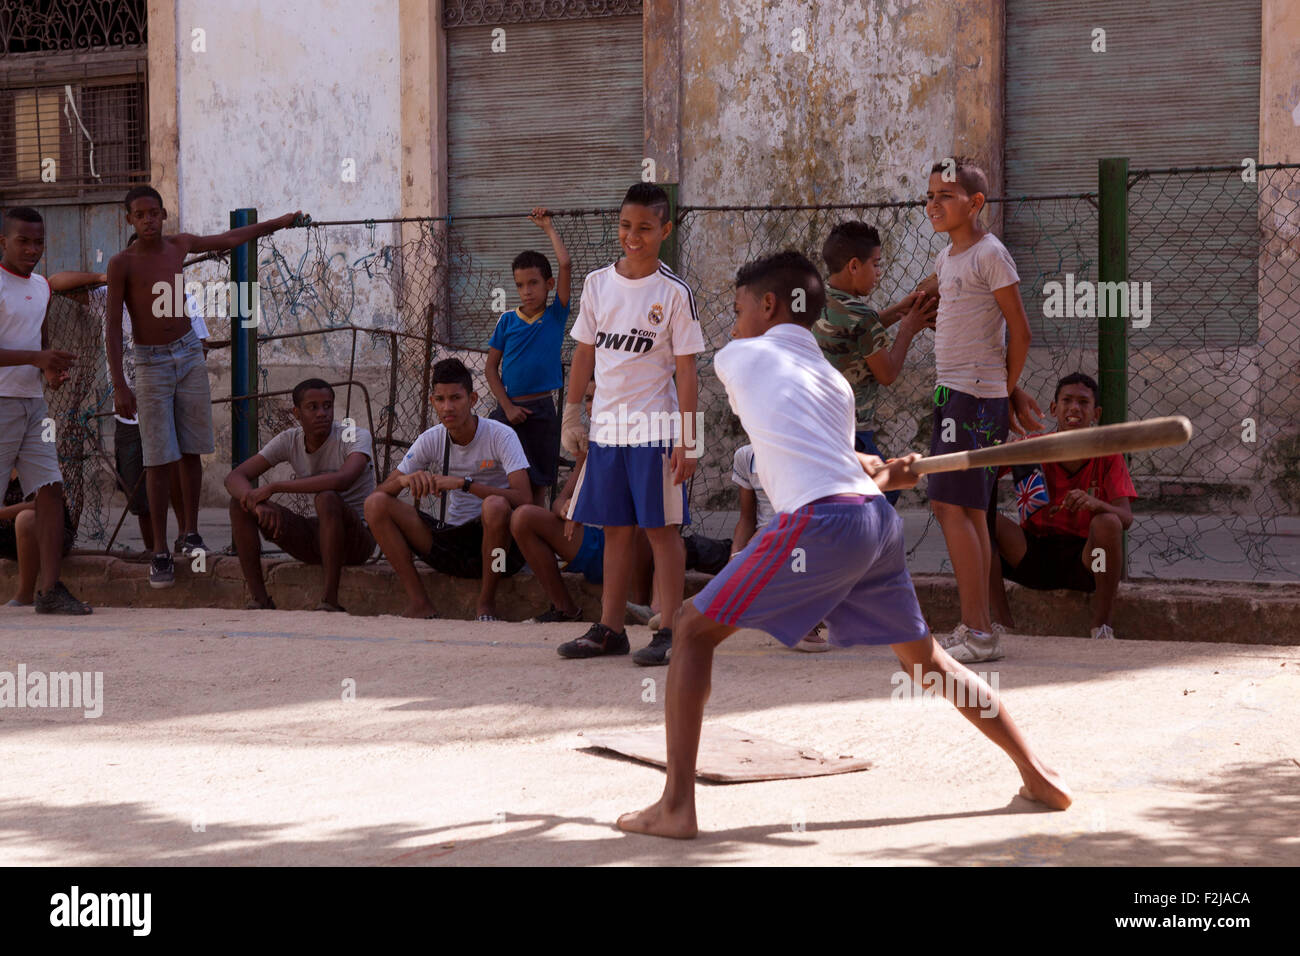 Kids playing baseball in Havana, Cuba. Stock Photo